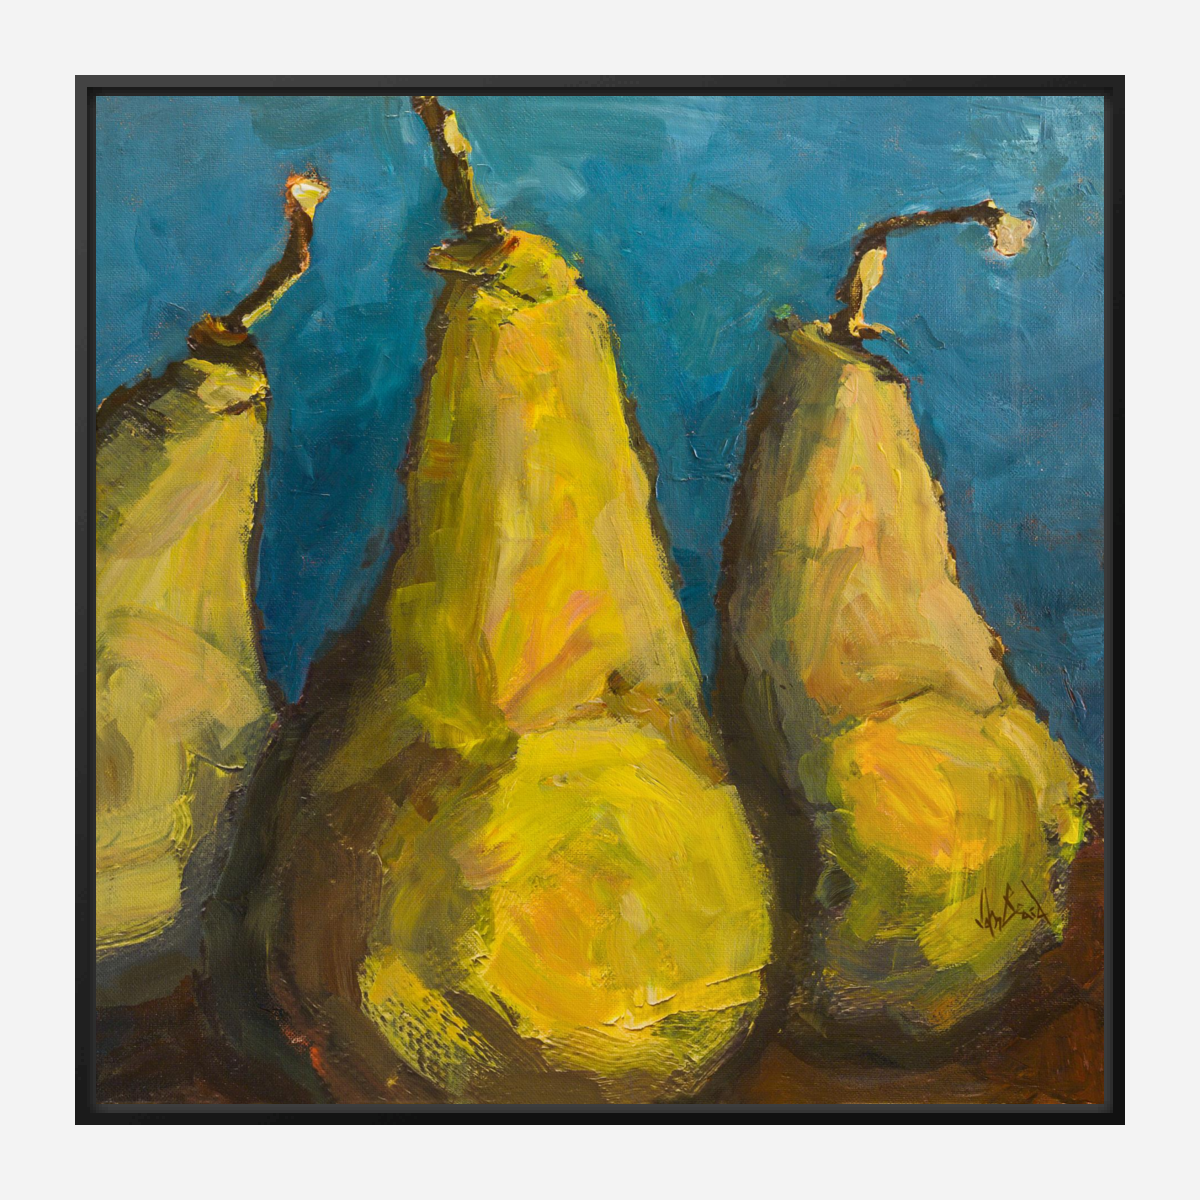 Pears with Teal Artist Enhanced Canvas Print